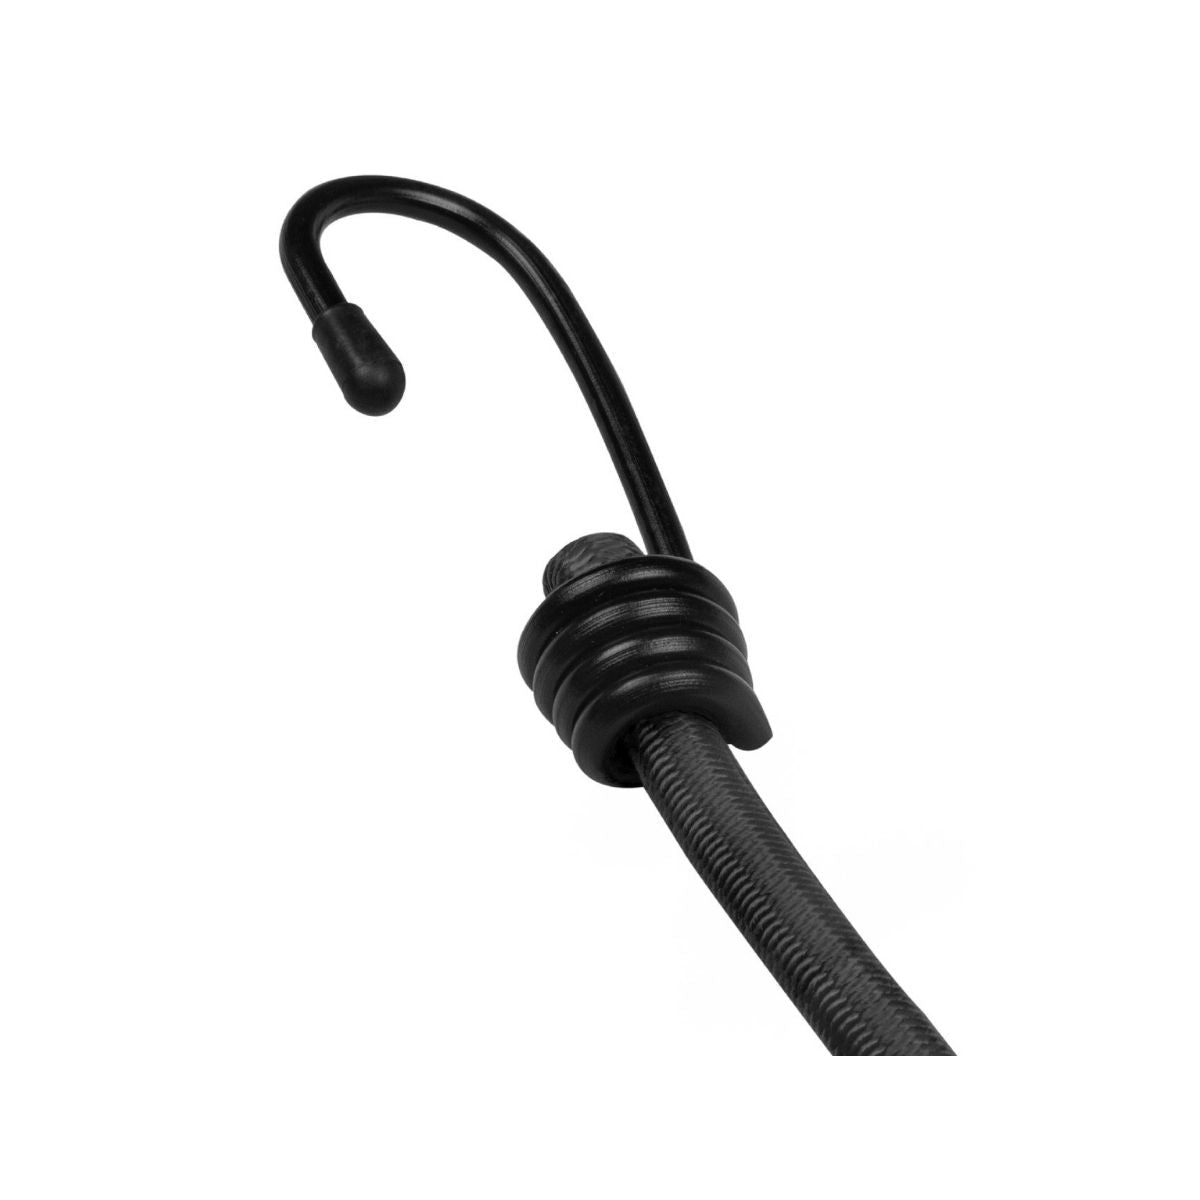 MotoTech Root Bungee Cord Tie-down | OutdoorTravelGear.com - 2